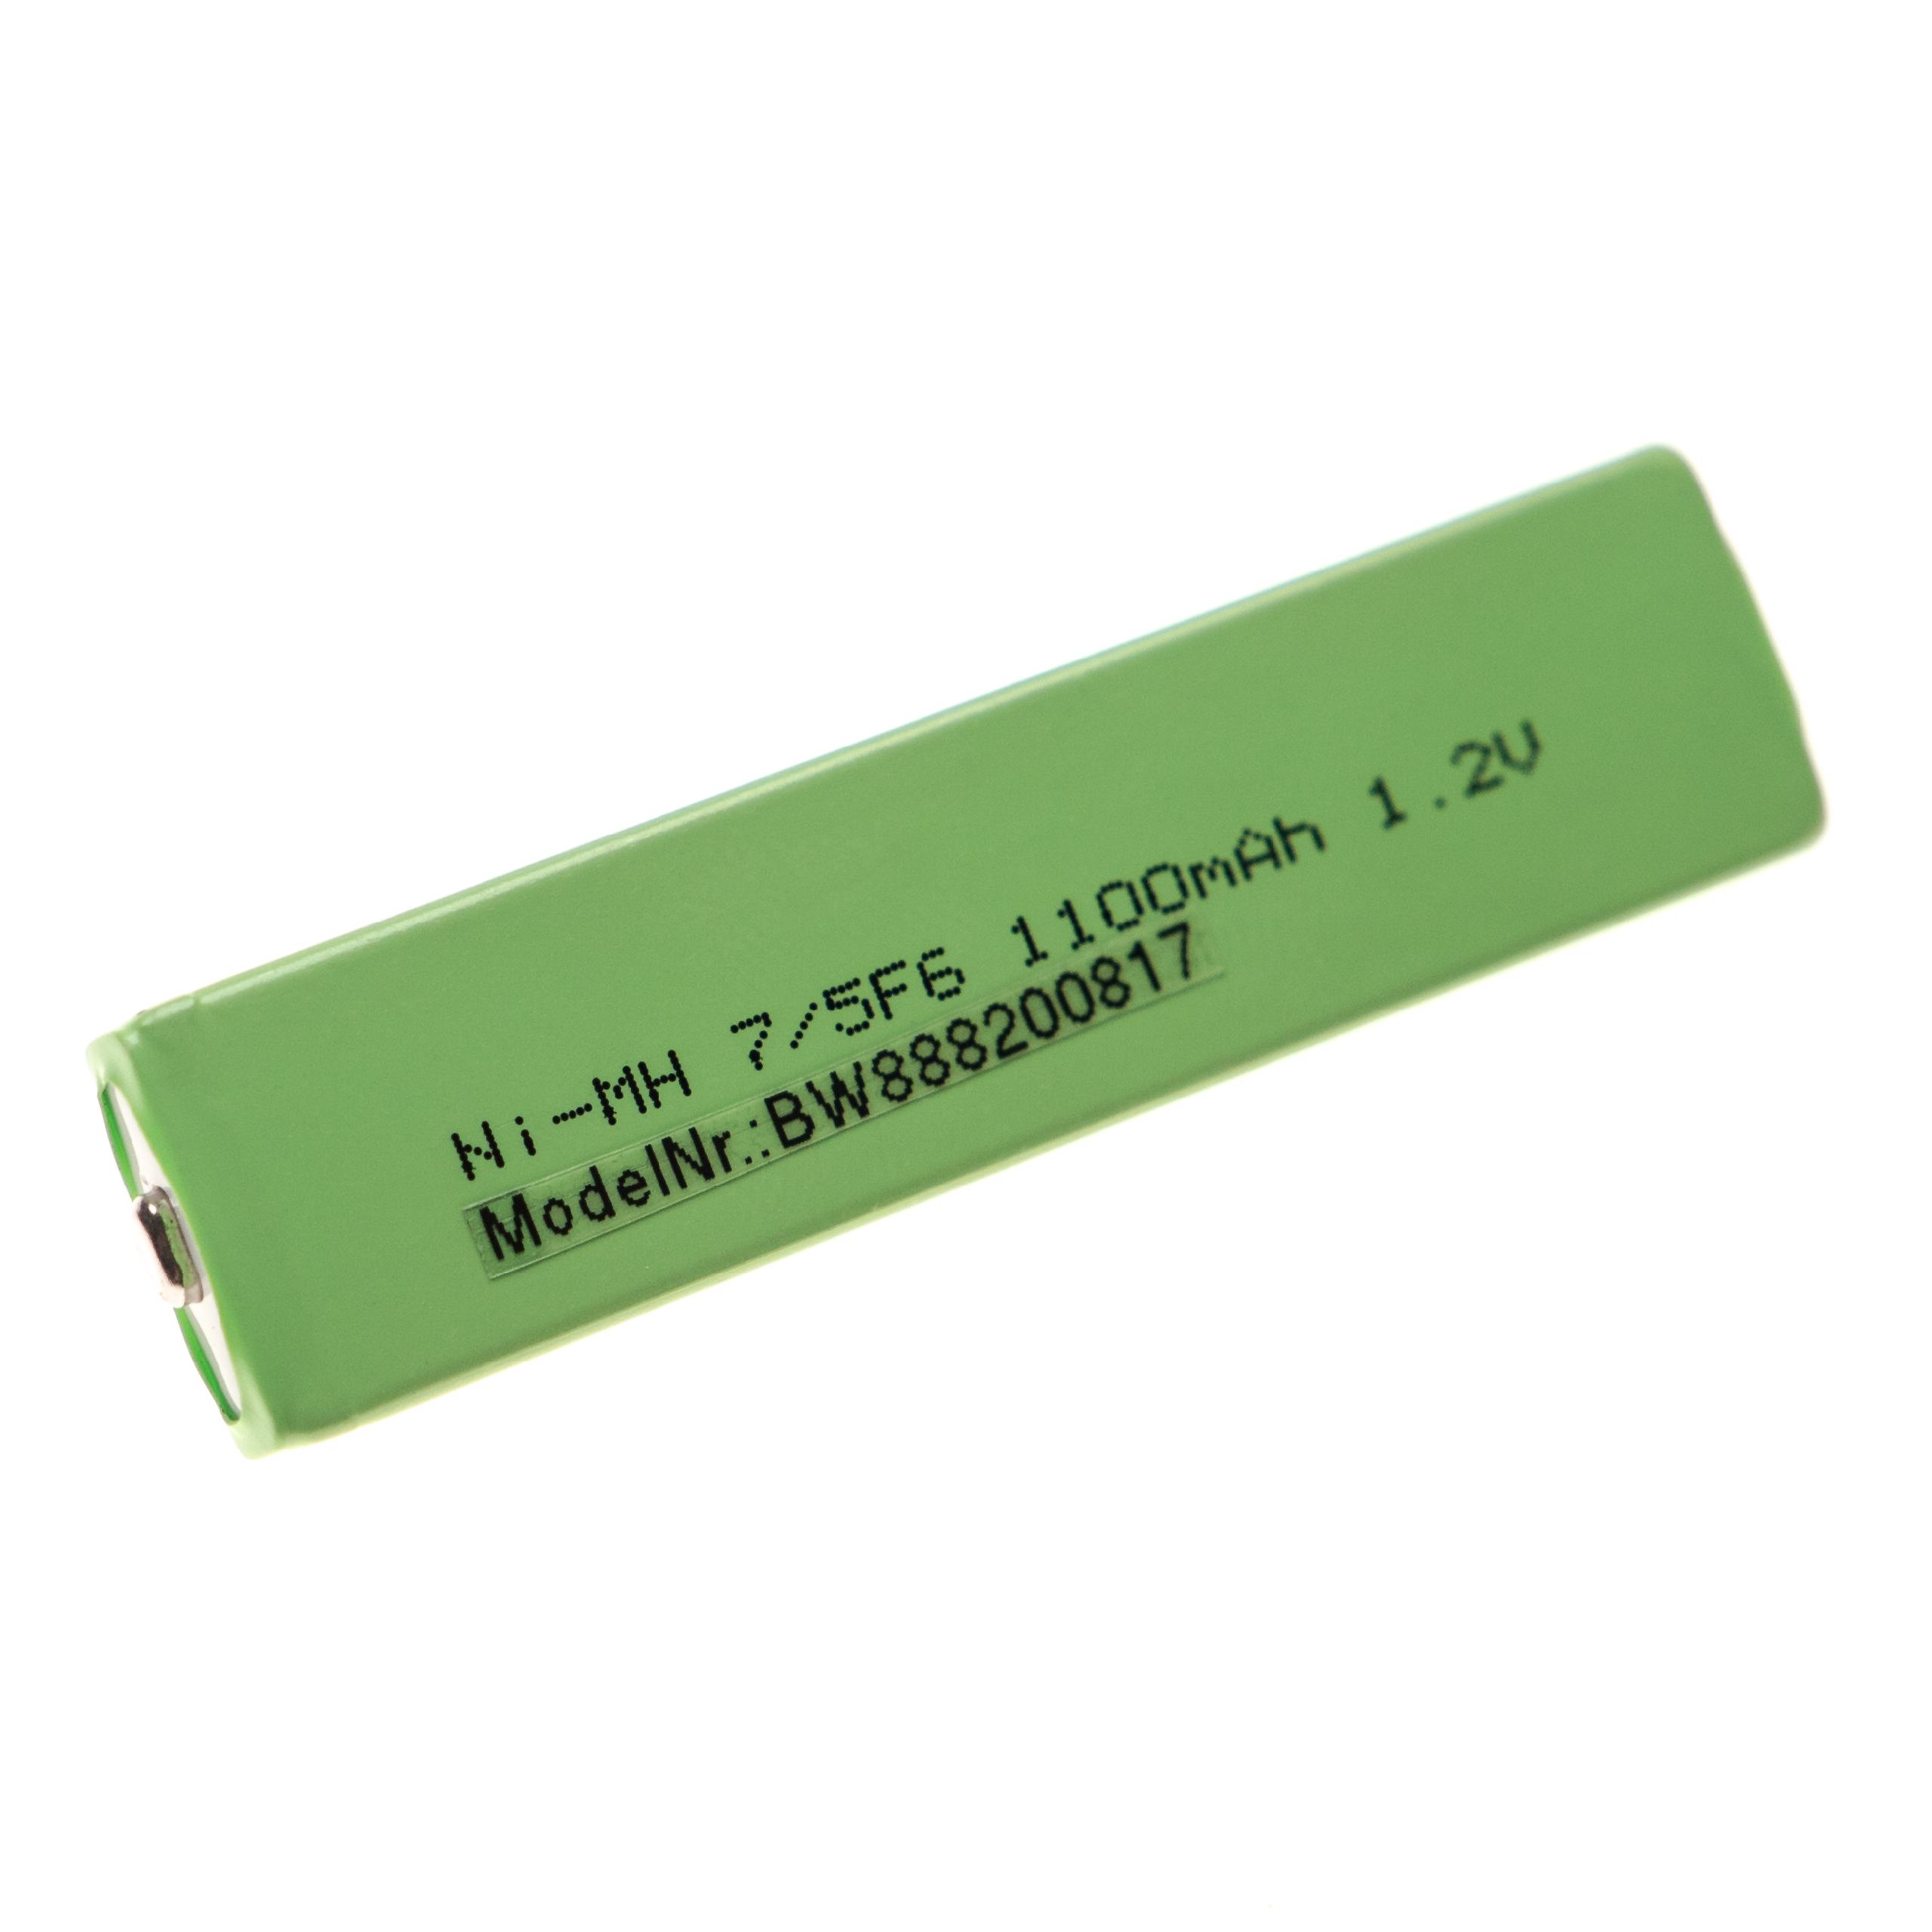 Ogniwo Akumulator do odtwarzacza CD zamiennik Aiwa MHB-901 - 1100 mAh, 1,2 V, 7/5F6, Button Top